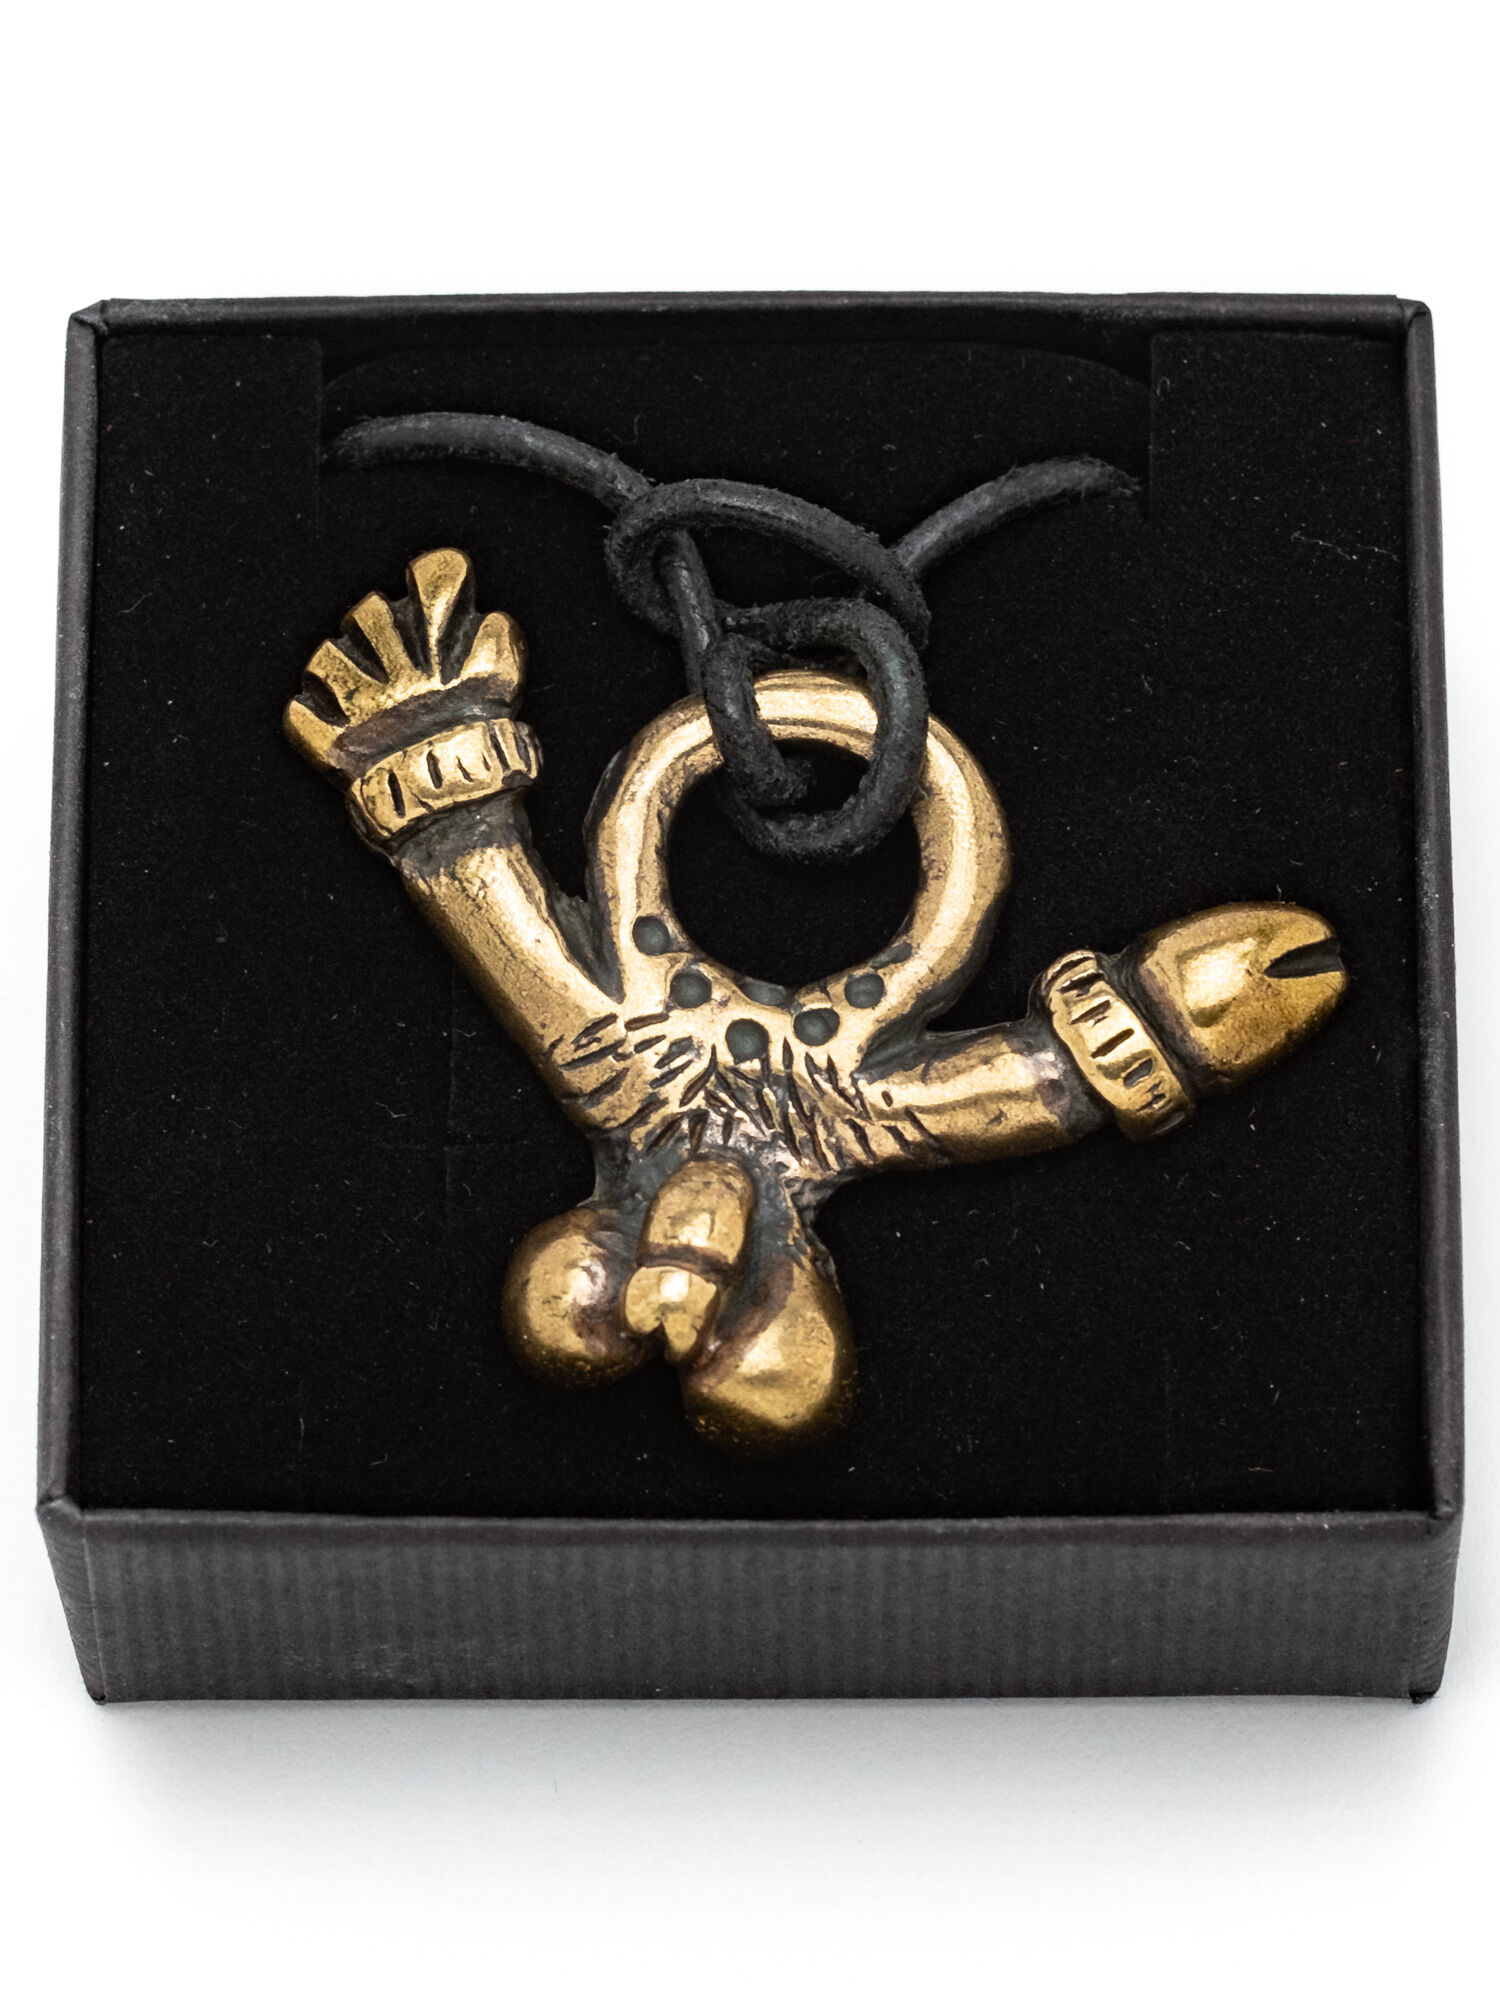 Phallus-Amulett geflügelt Mittelalter Anhänger Amulett Kette 